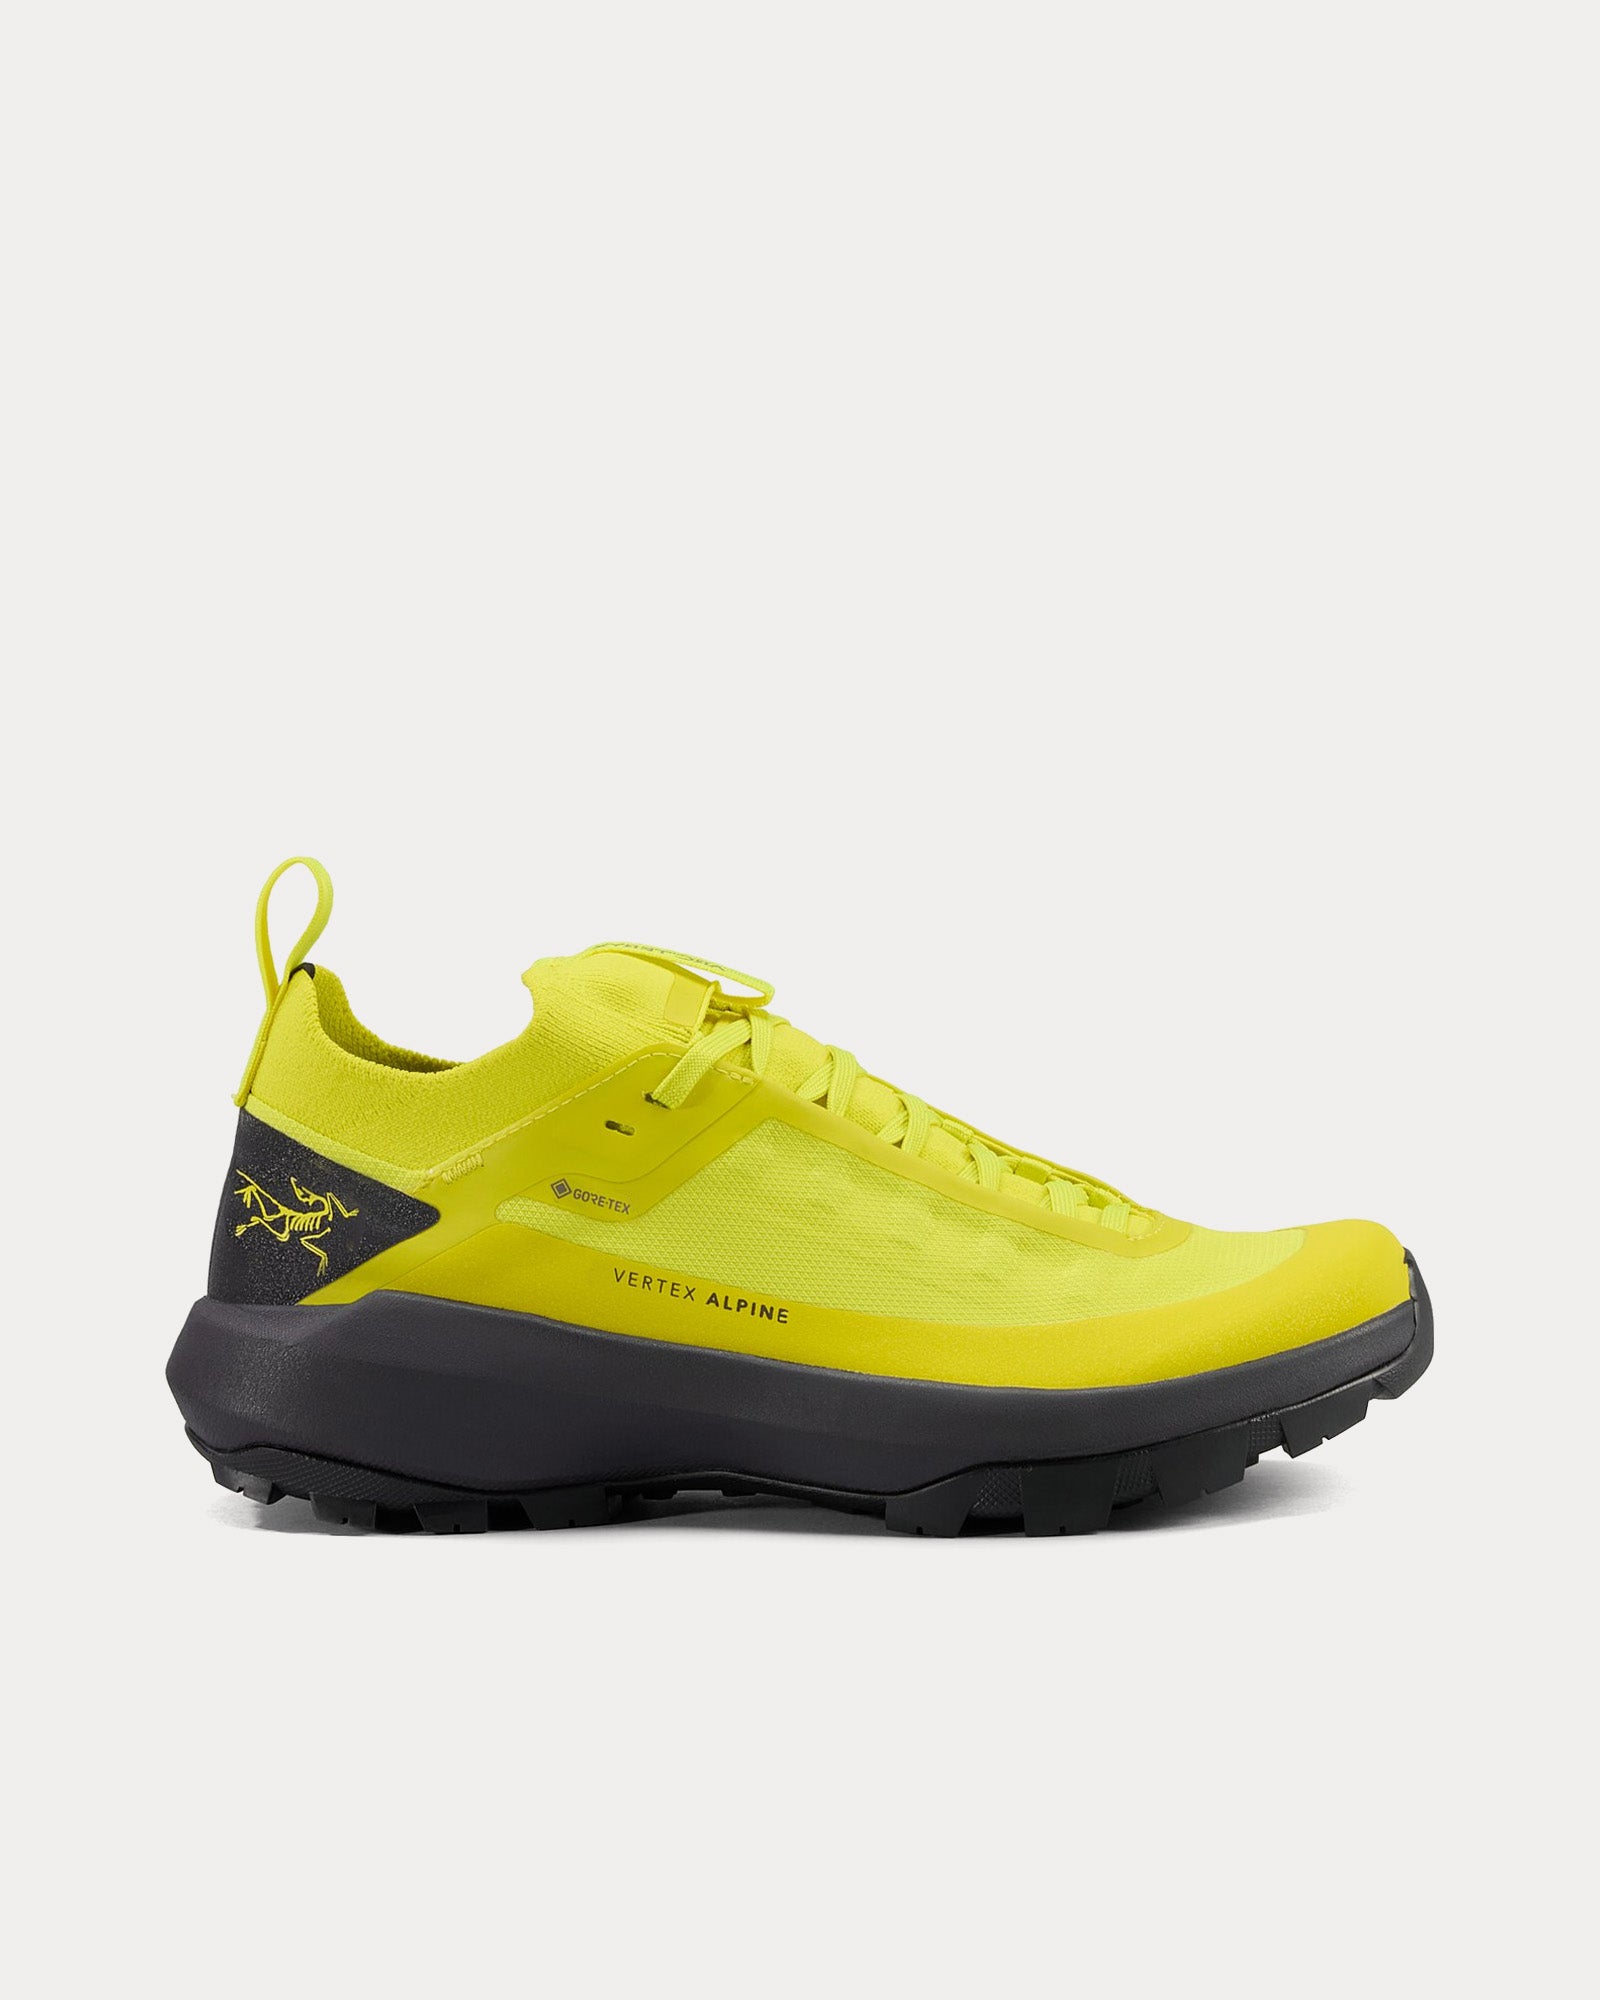 Arc'teryx - Vertex Alpine GTX Euphoria / Graphite Running Shoes